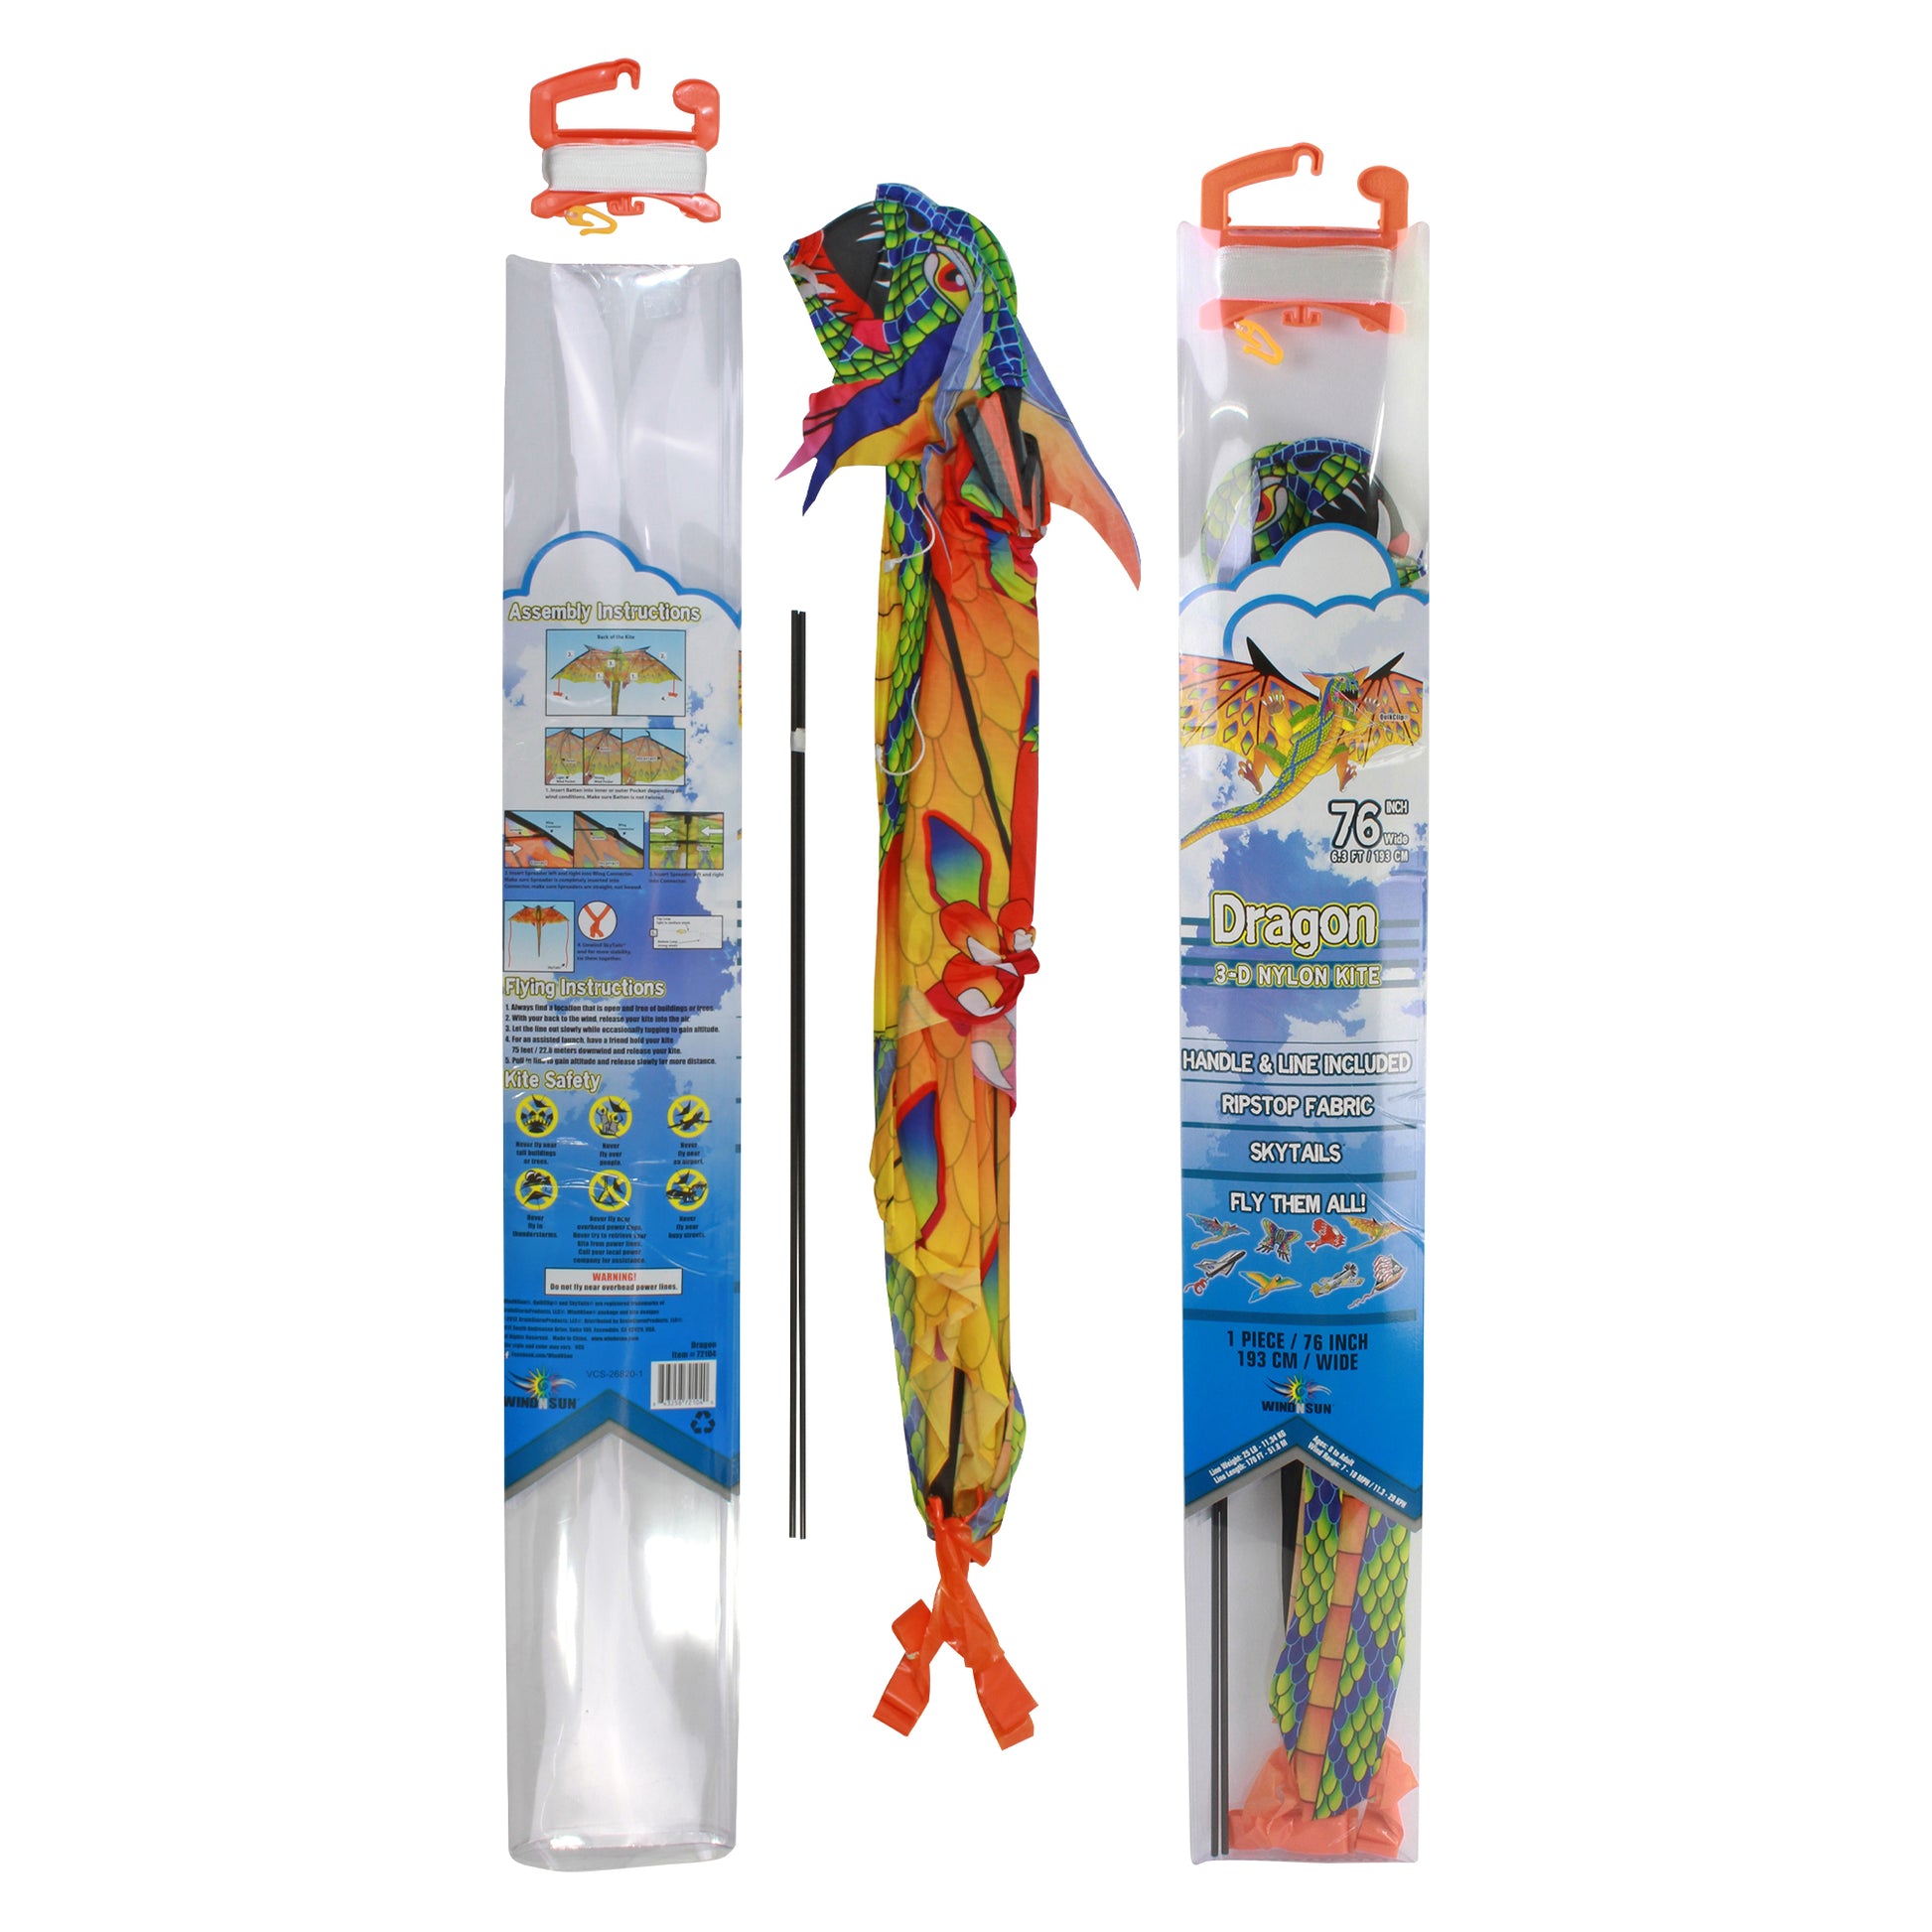 Fabric Kite Package, Nylon Kite Package